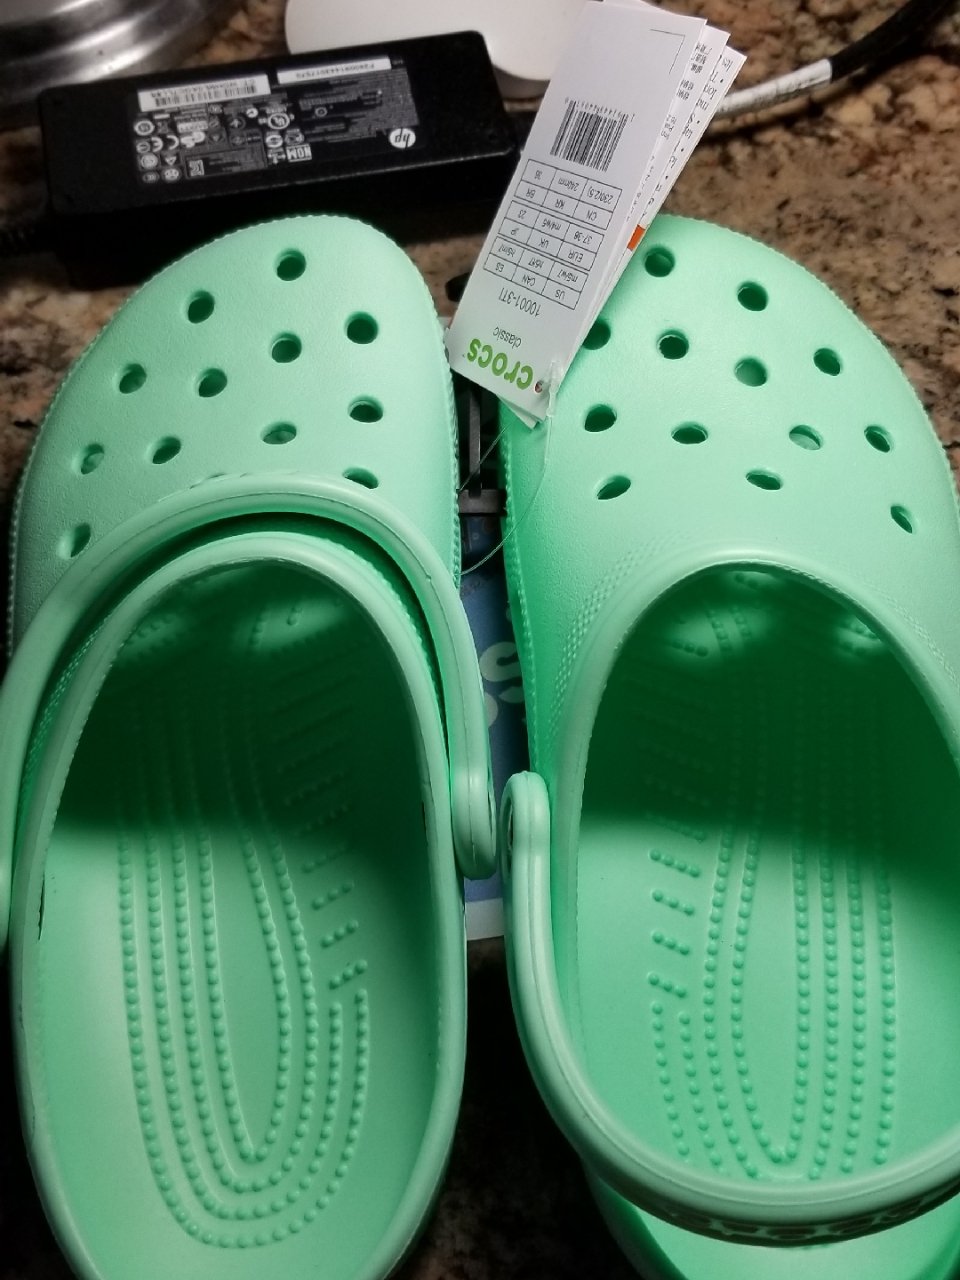 Free crocs shoe fina...